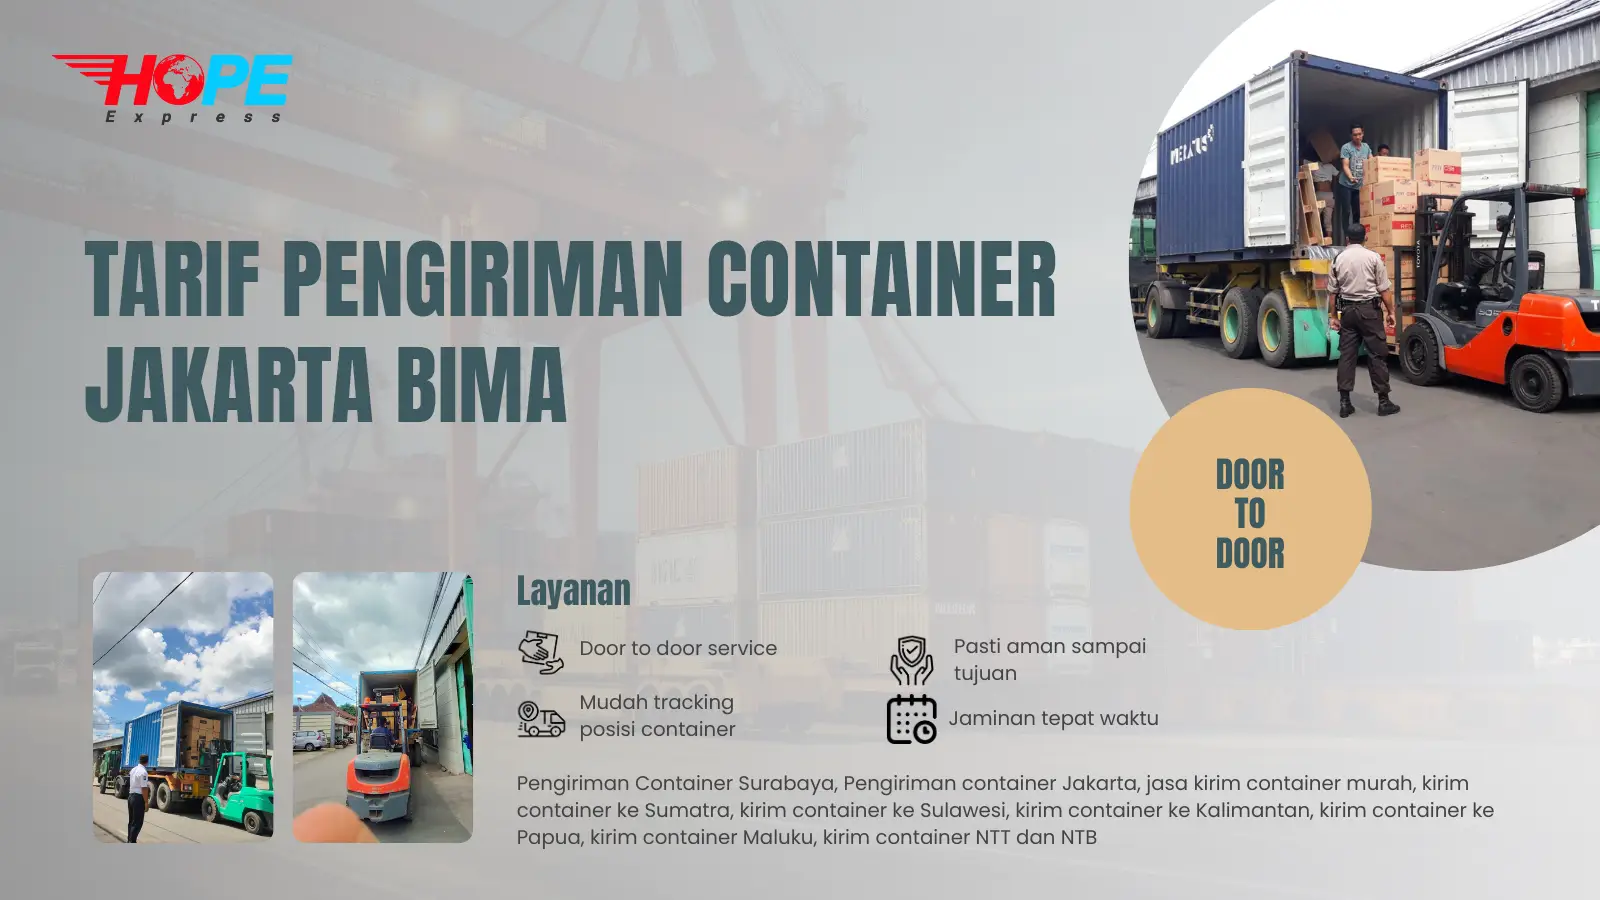 Tarif Pengiriman Container Jakarta Bima